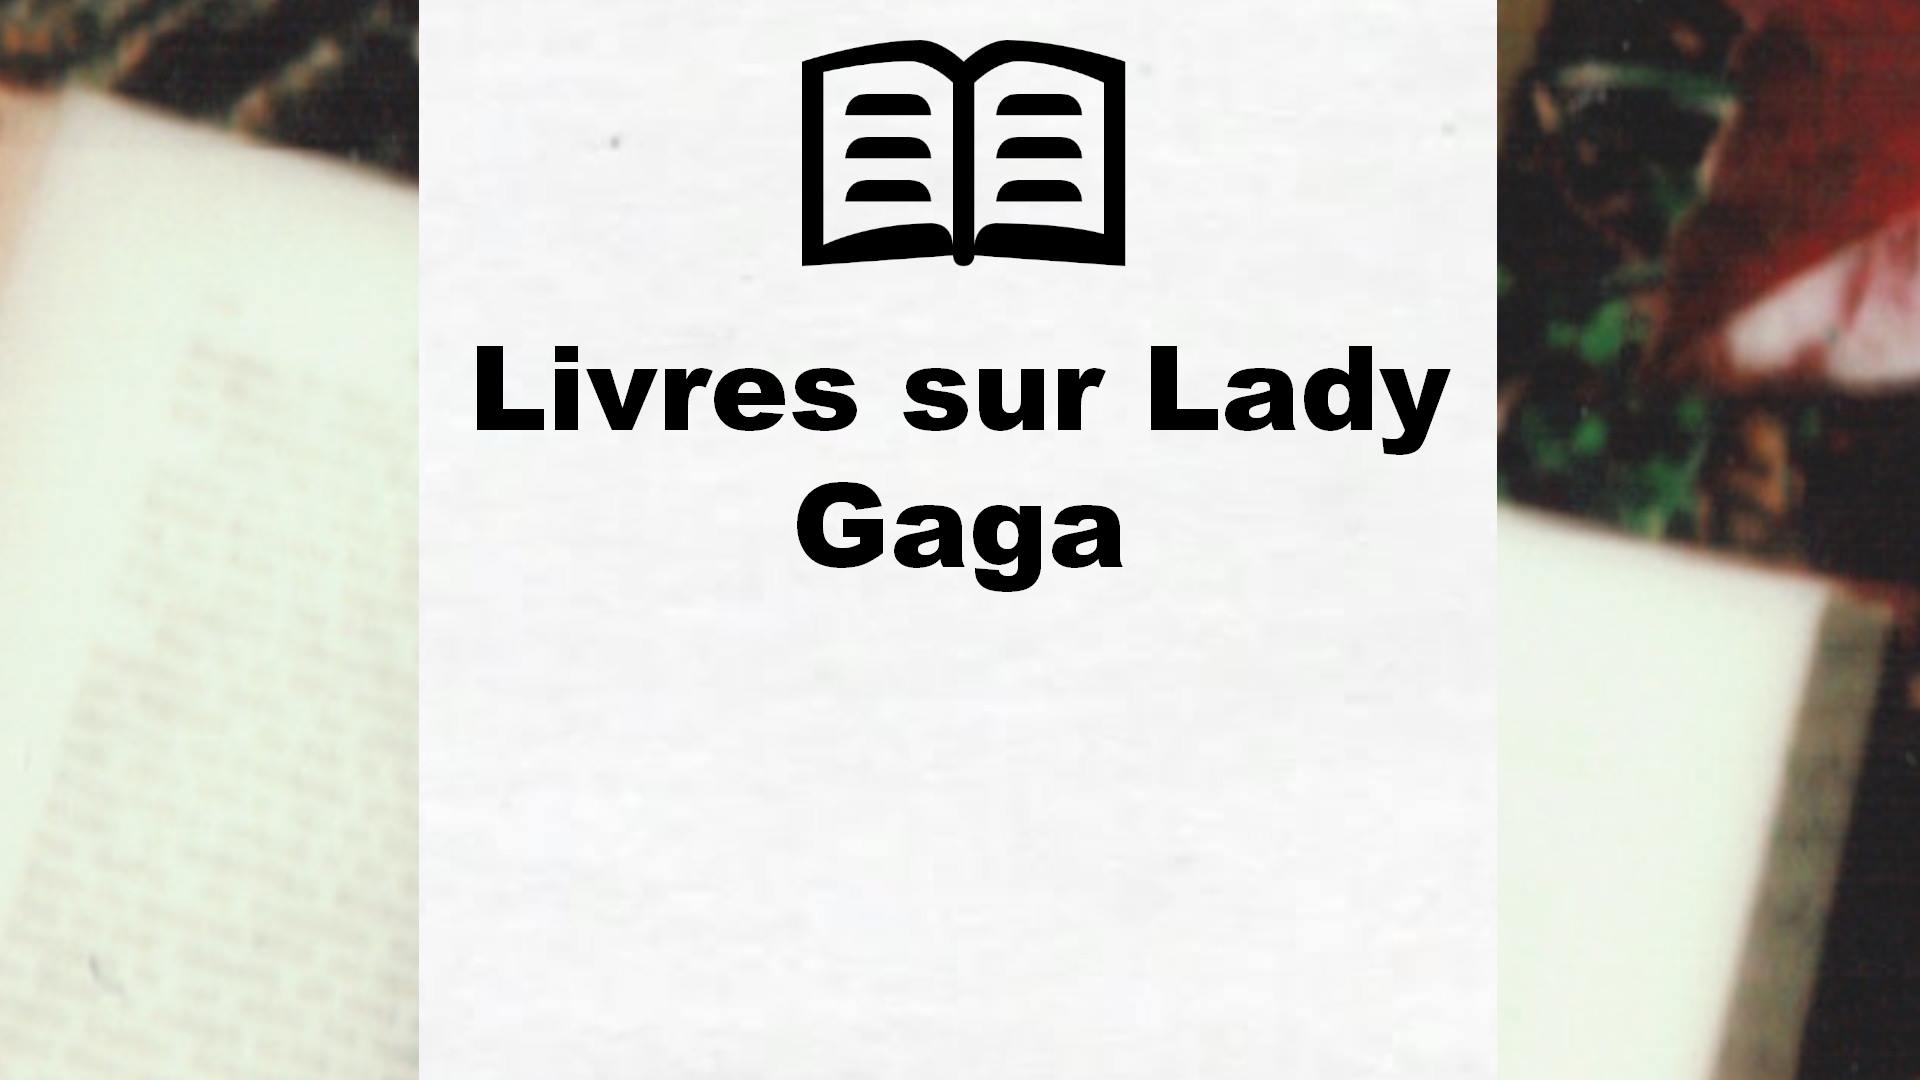 Livres sur Lady Gaga